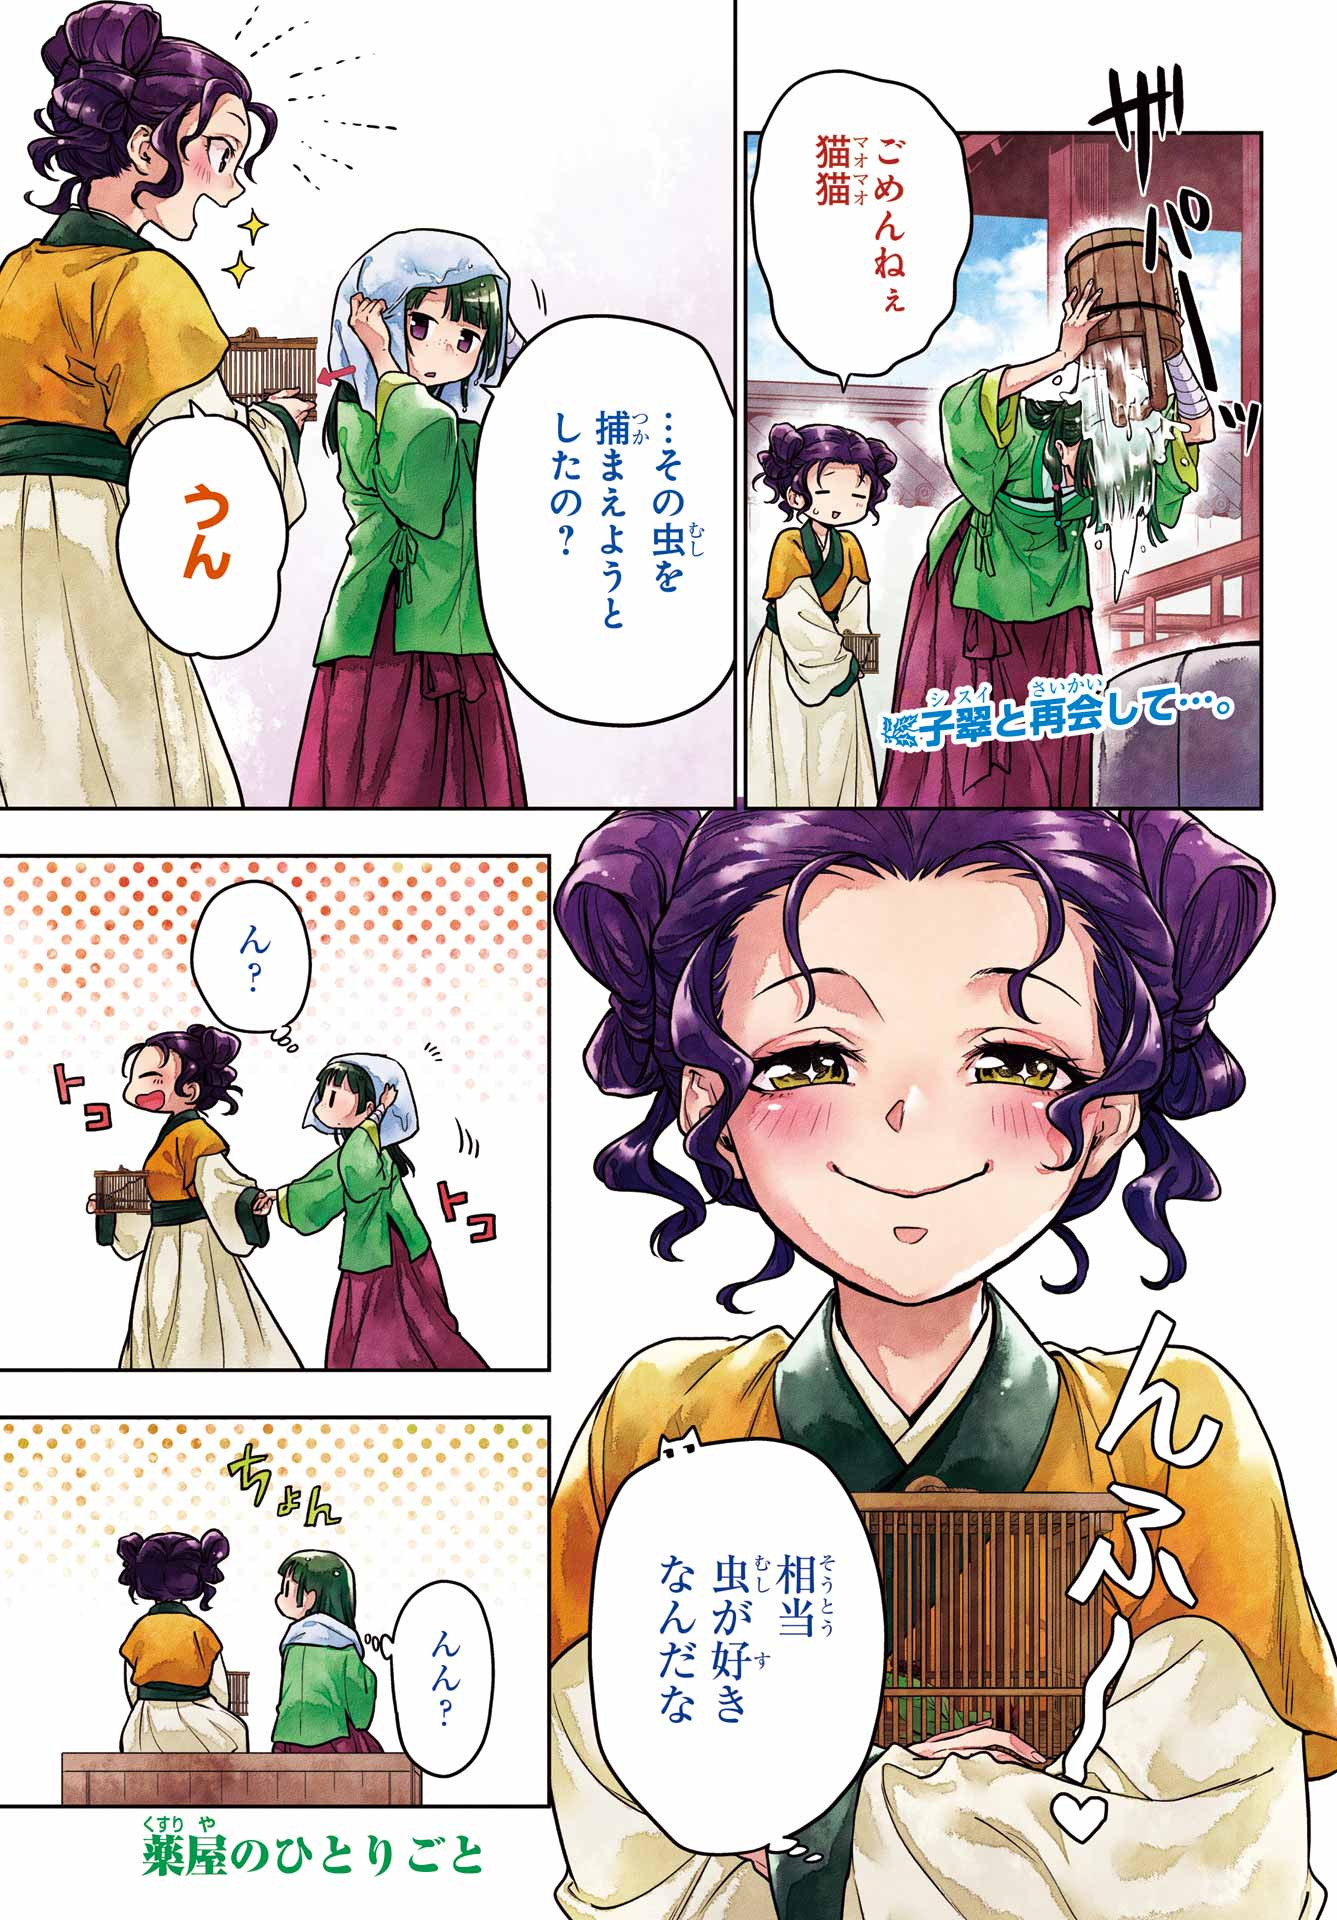 Kusuriya no Hitorigoto - Chapter 55-2 - Page 2